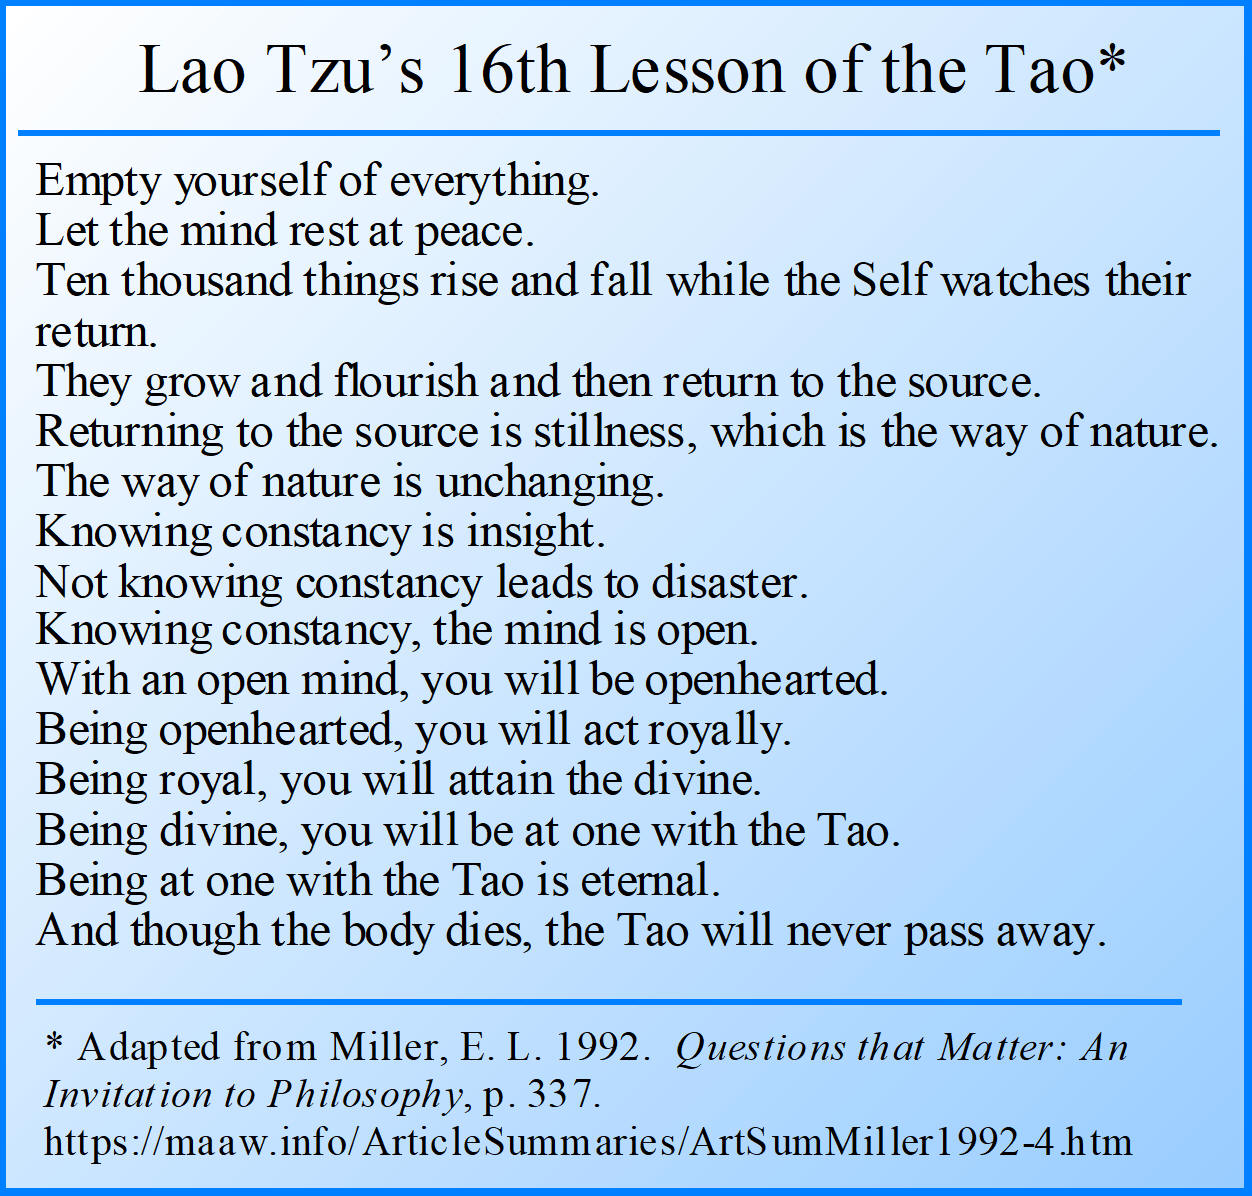 Lao Tzu's 16th Lesson of the Tao